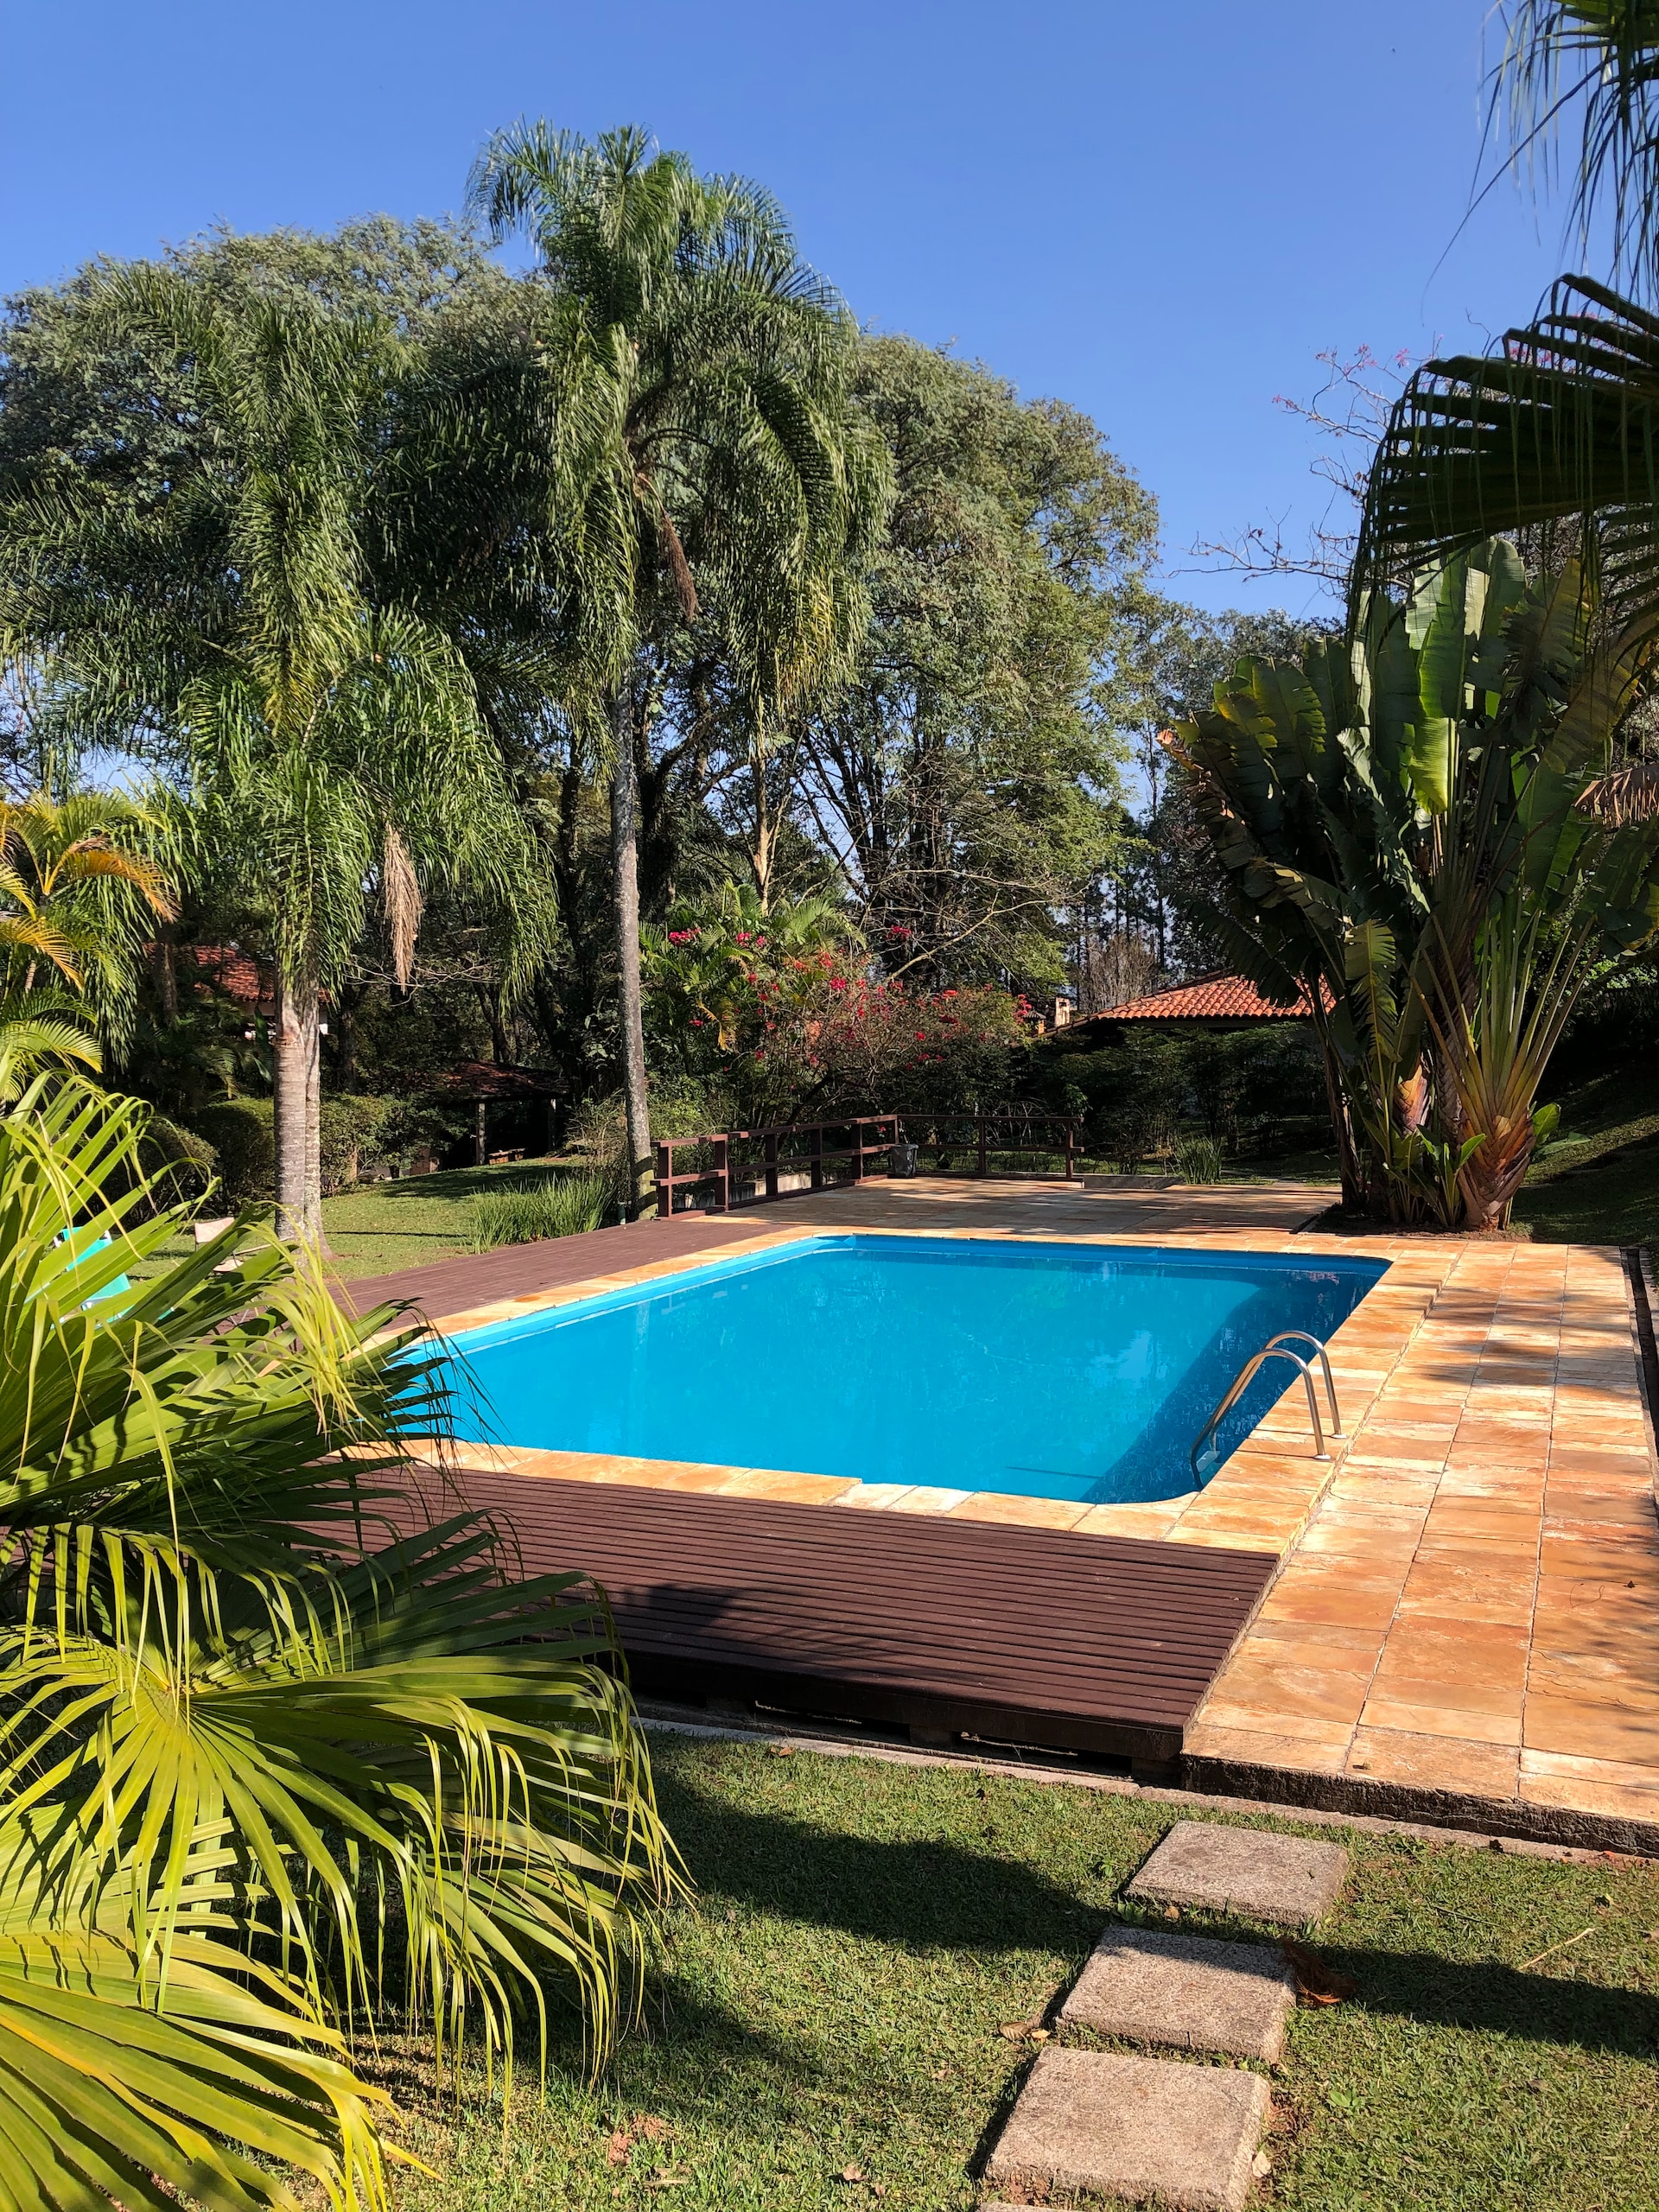 Swimming-Pool-Construction-Pool-Works-Kenya